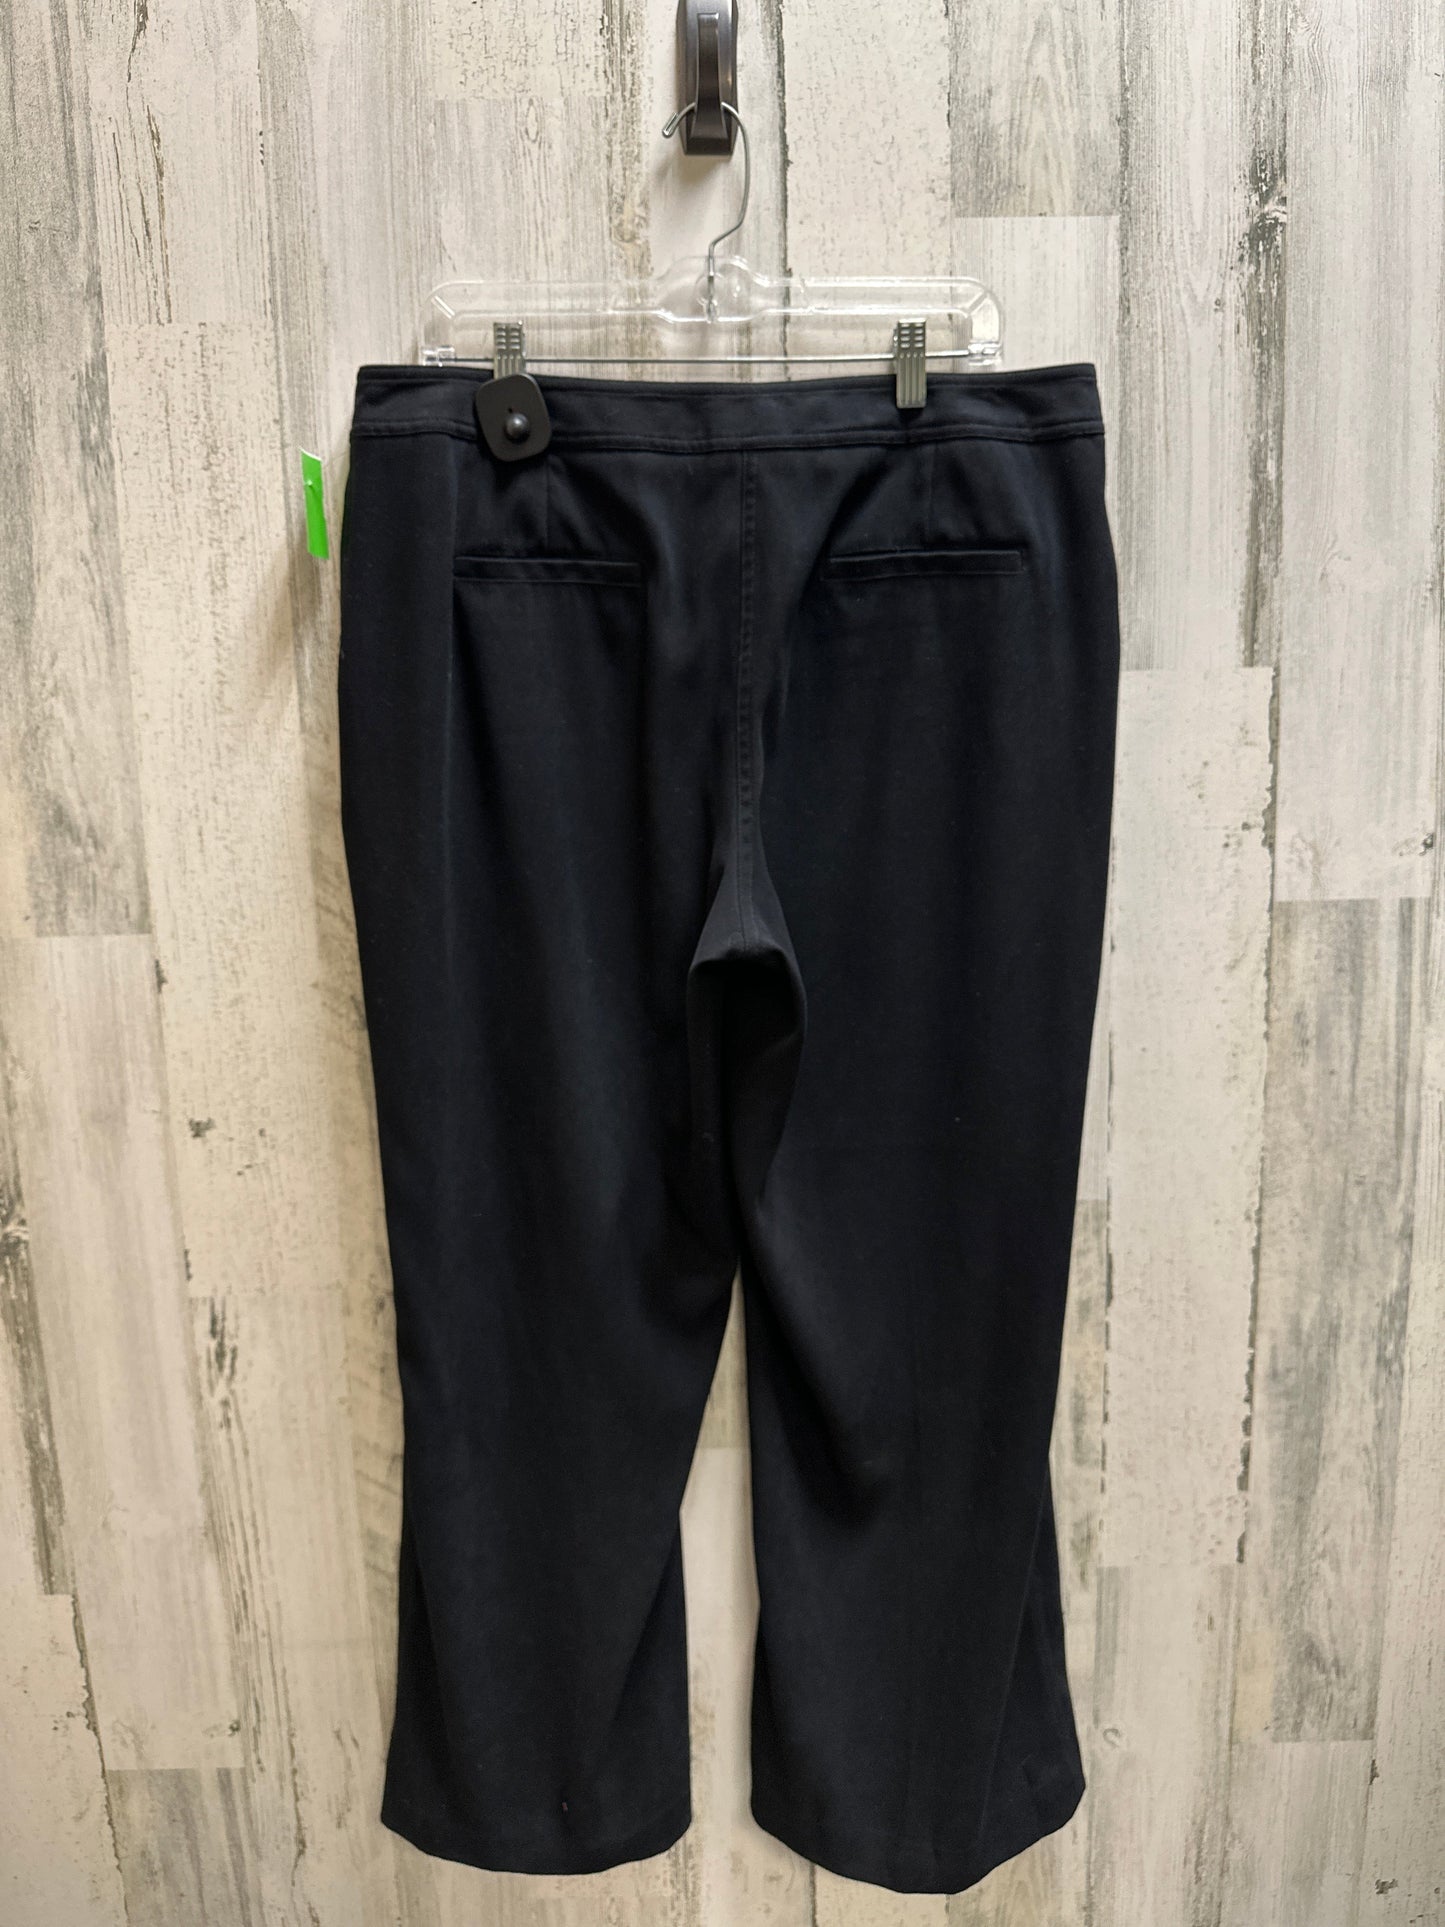 Pants Work/dress By Coldwater Creek  Size: 16